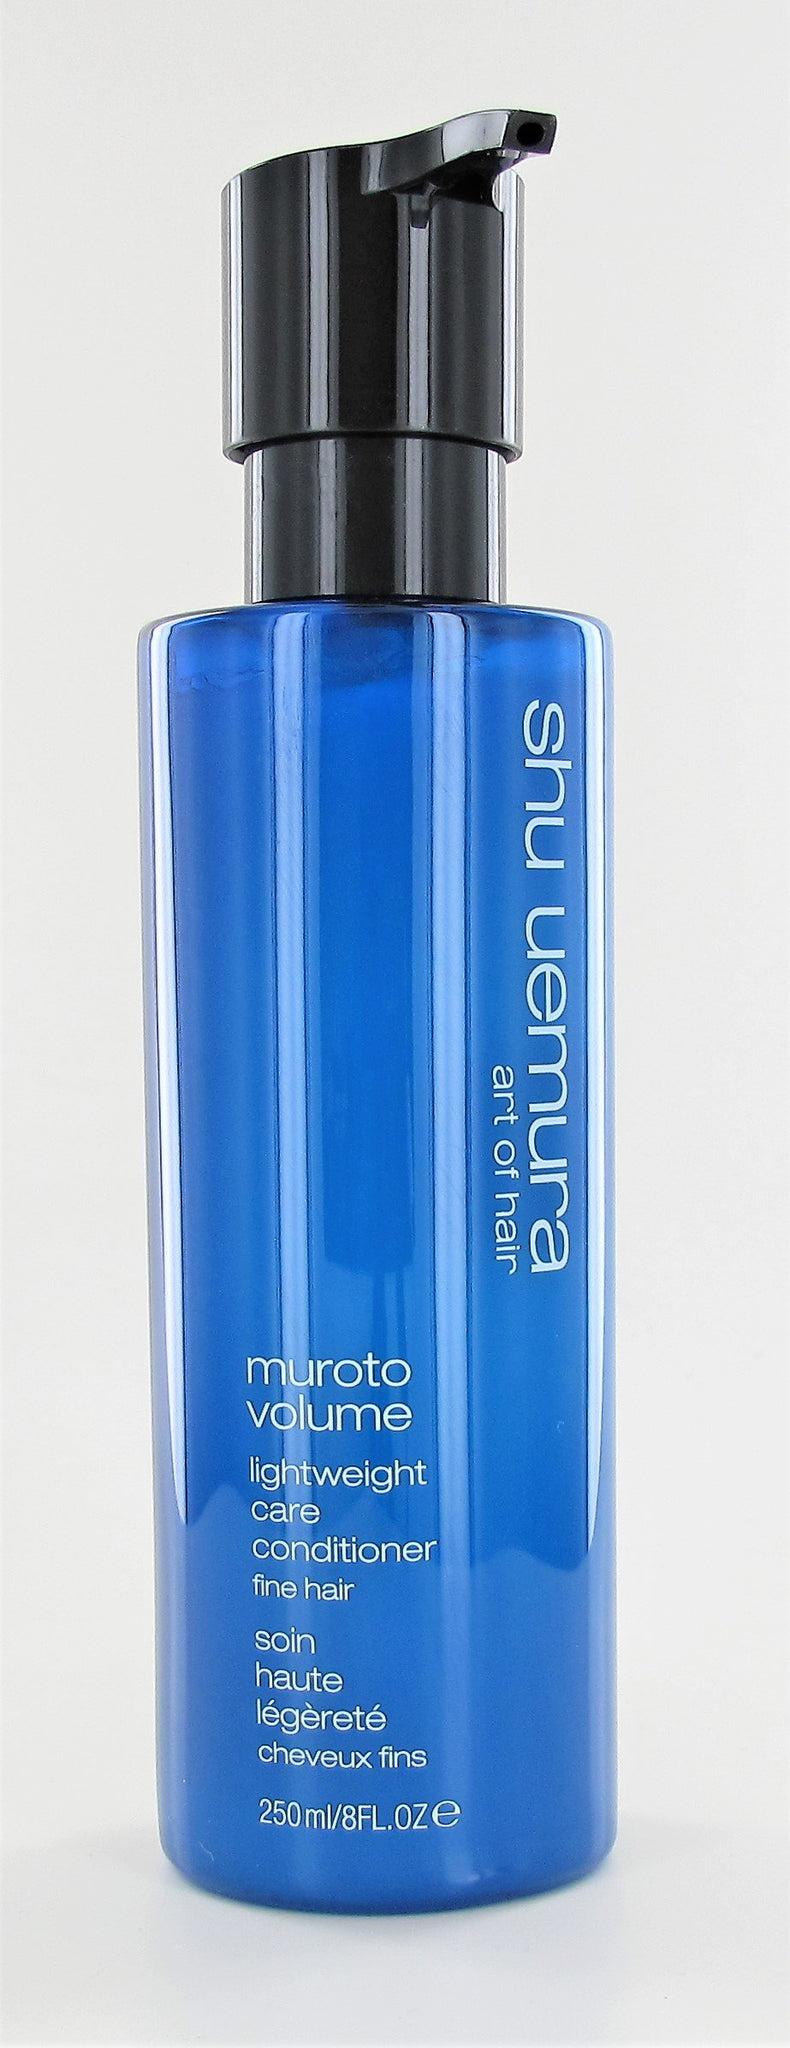 Shu Uemura Muroto Volume Lightweight Care Conditioner 8 oz